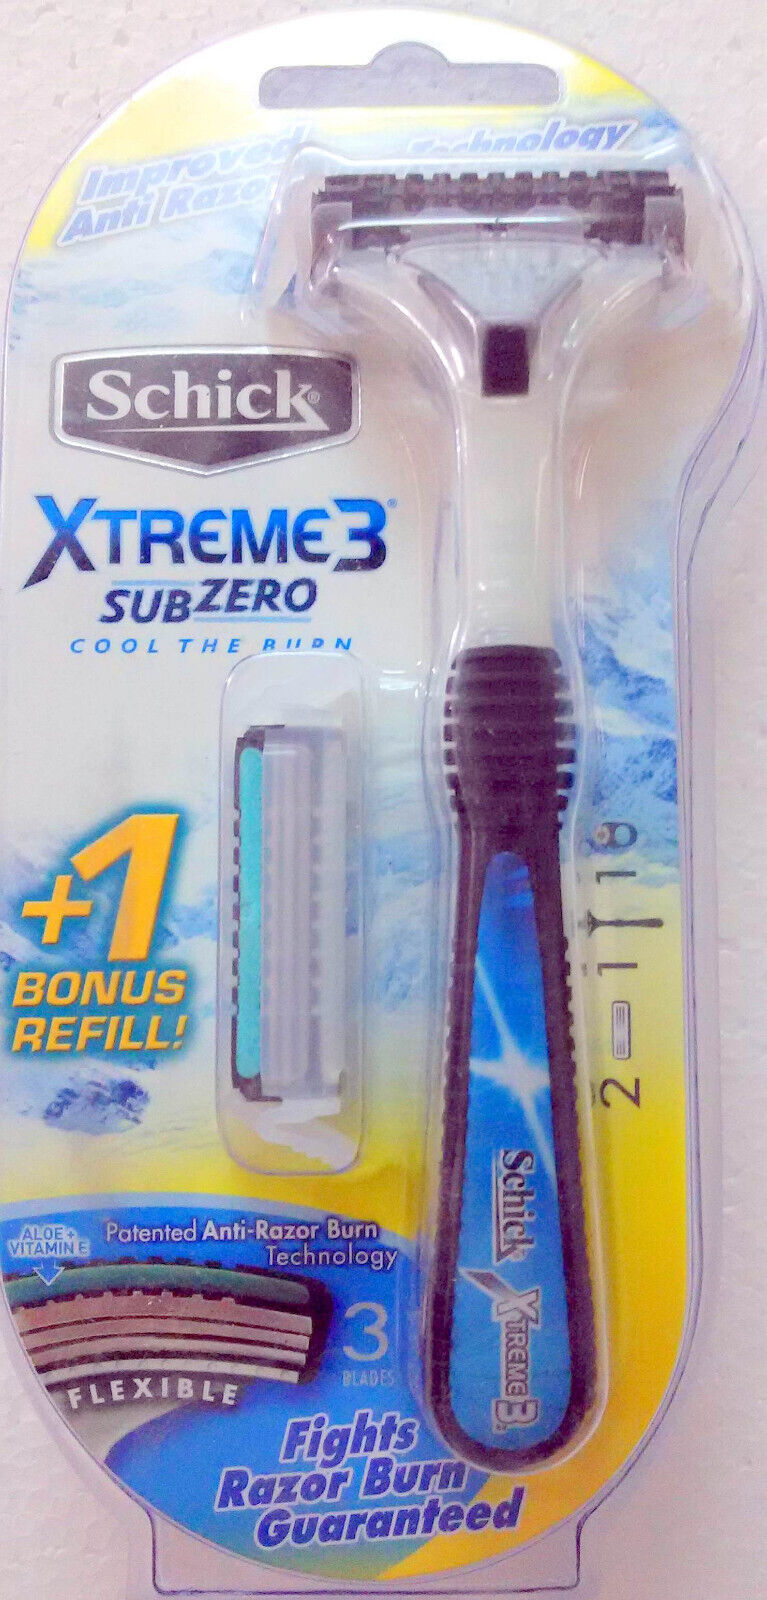 Primary image for Schick Xtreme3 SubZero Razor with 2 free Cartridges +1 free Razor Shower Hanger